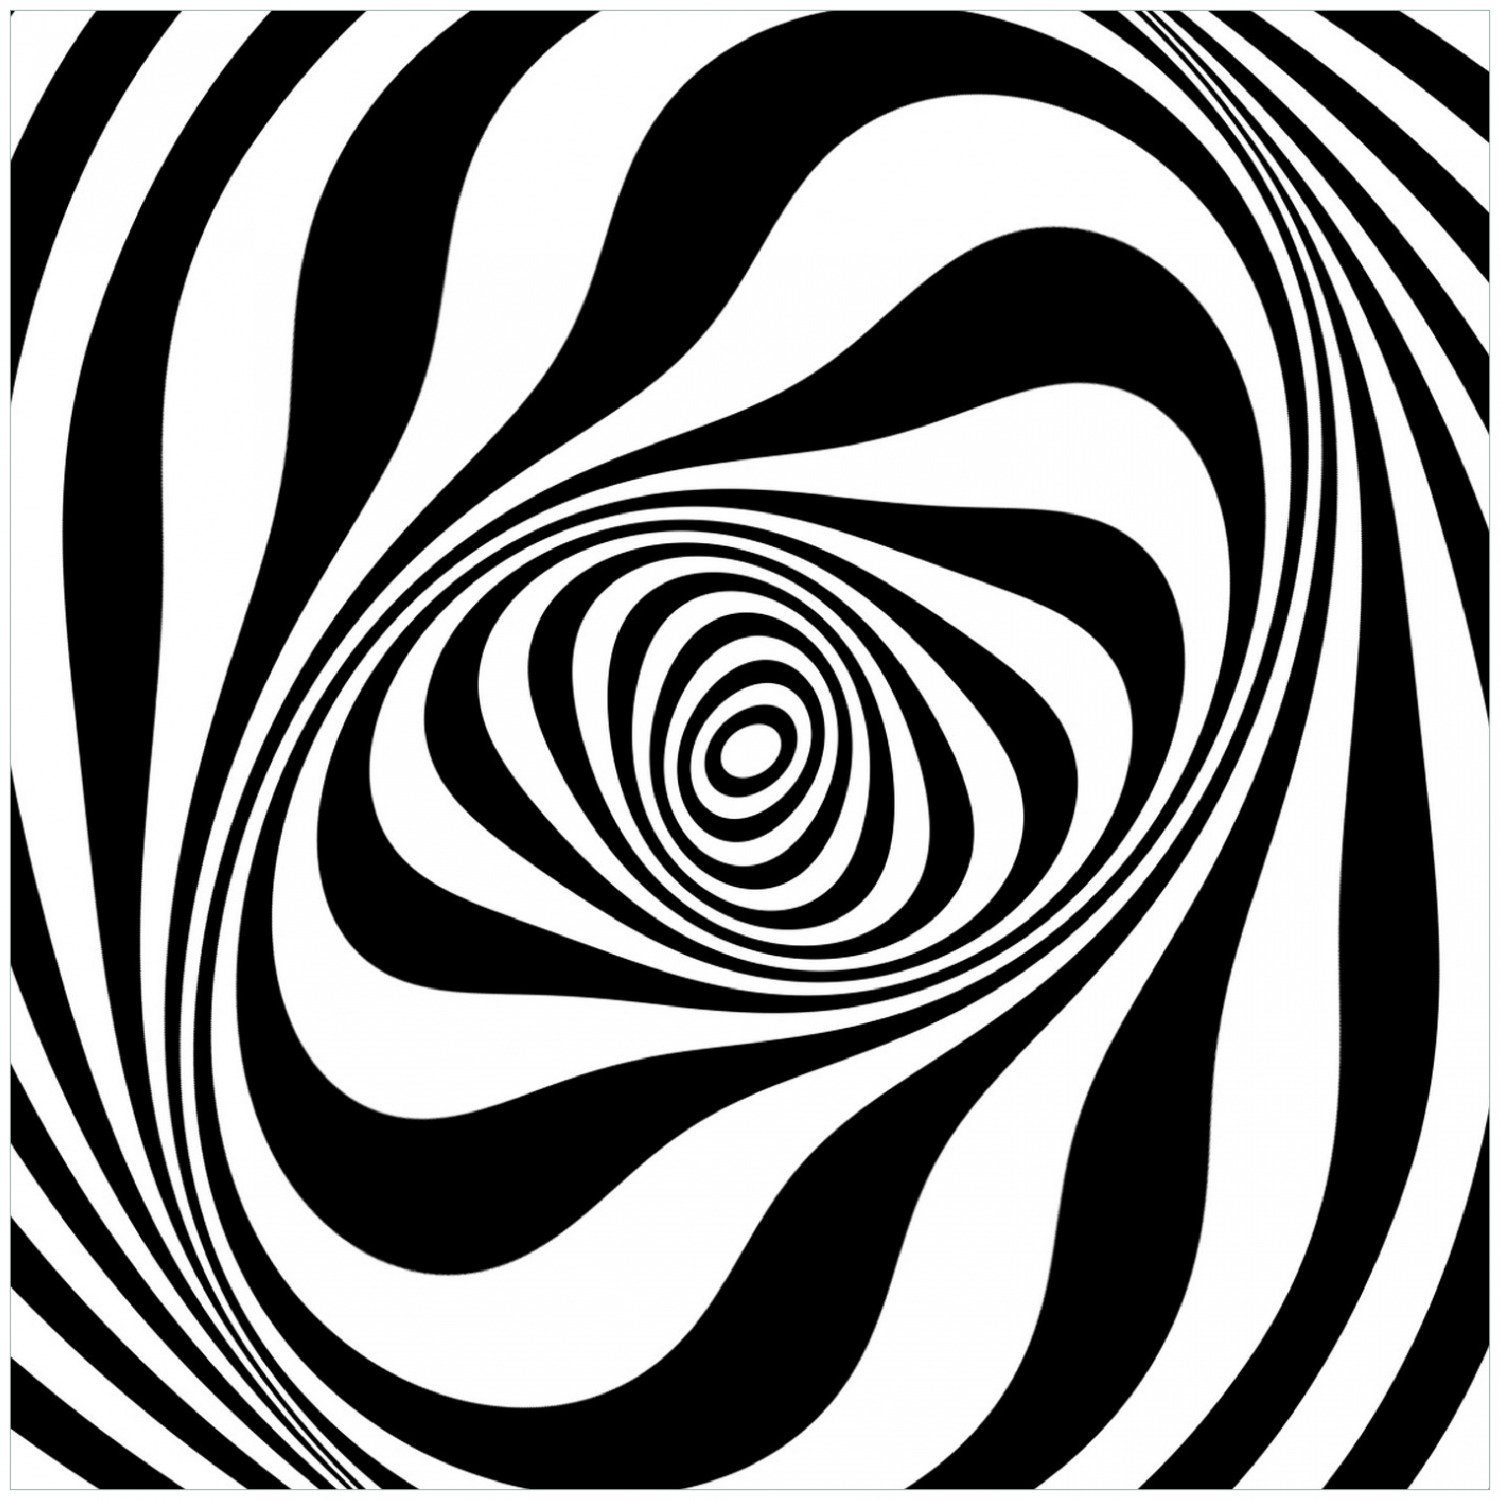 Wallario Memoboard Optische Täuschung - Zebra Muster - schwarz weiß